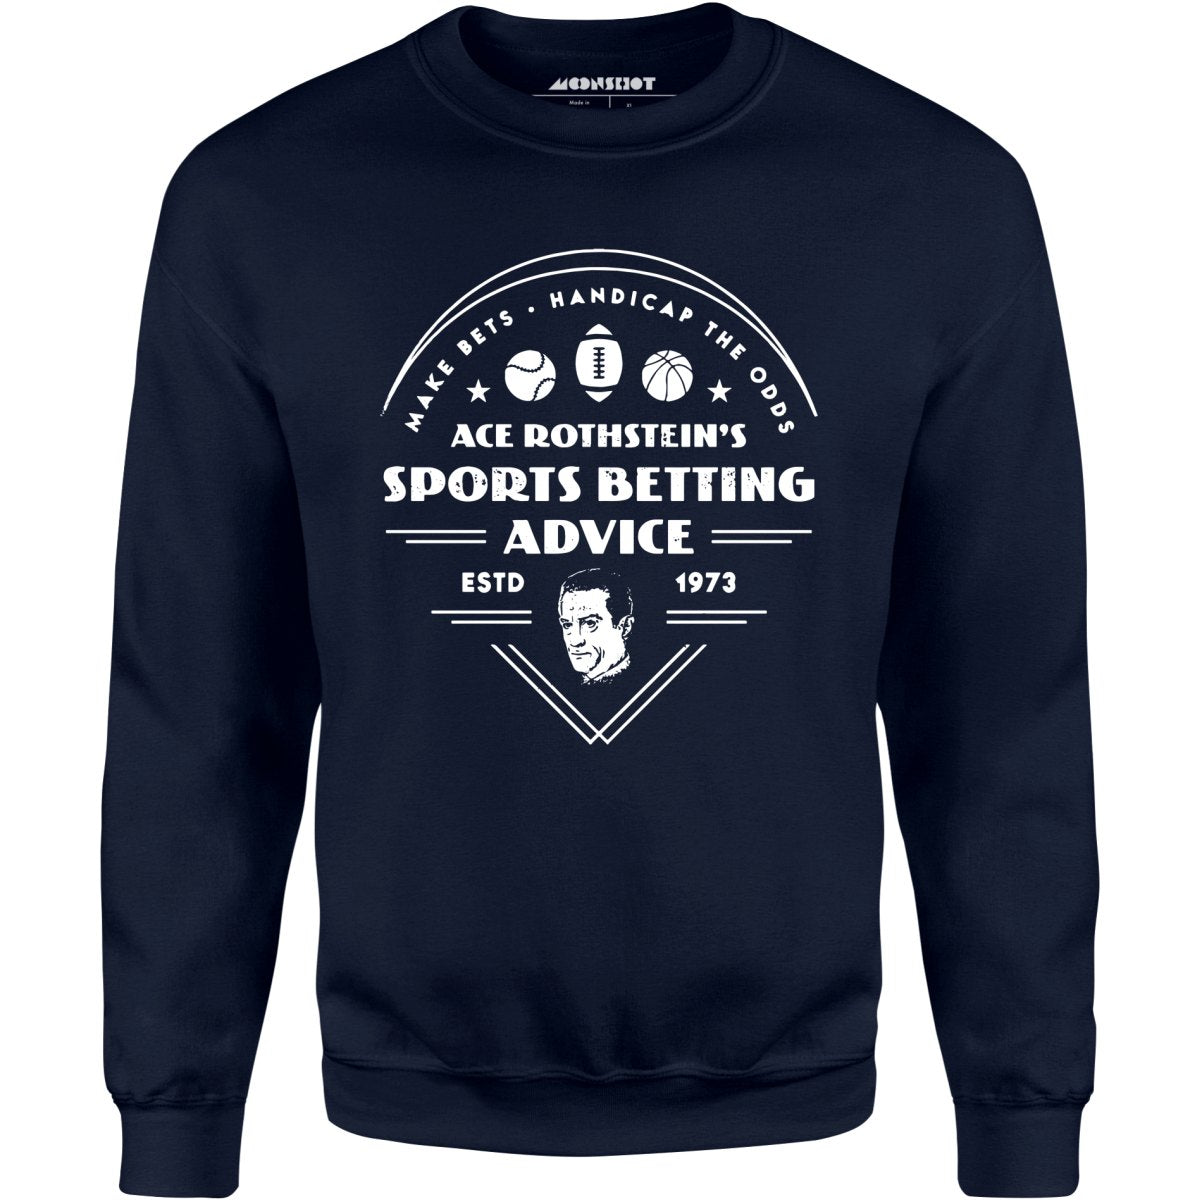 Ace Rothstein's Sports Betting Advice - Unisex Sweatshirt